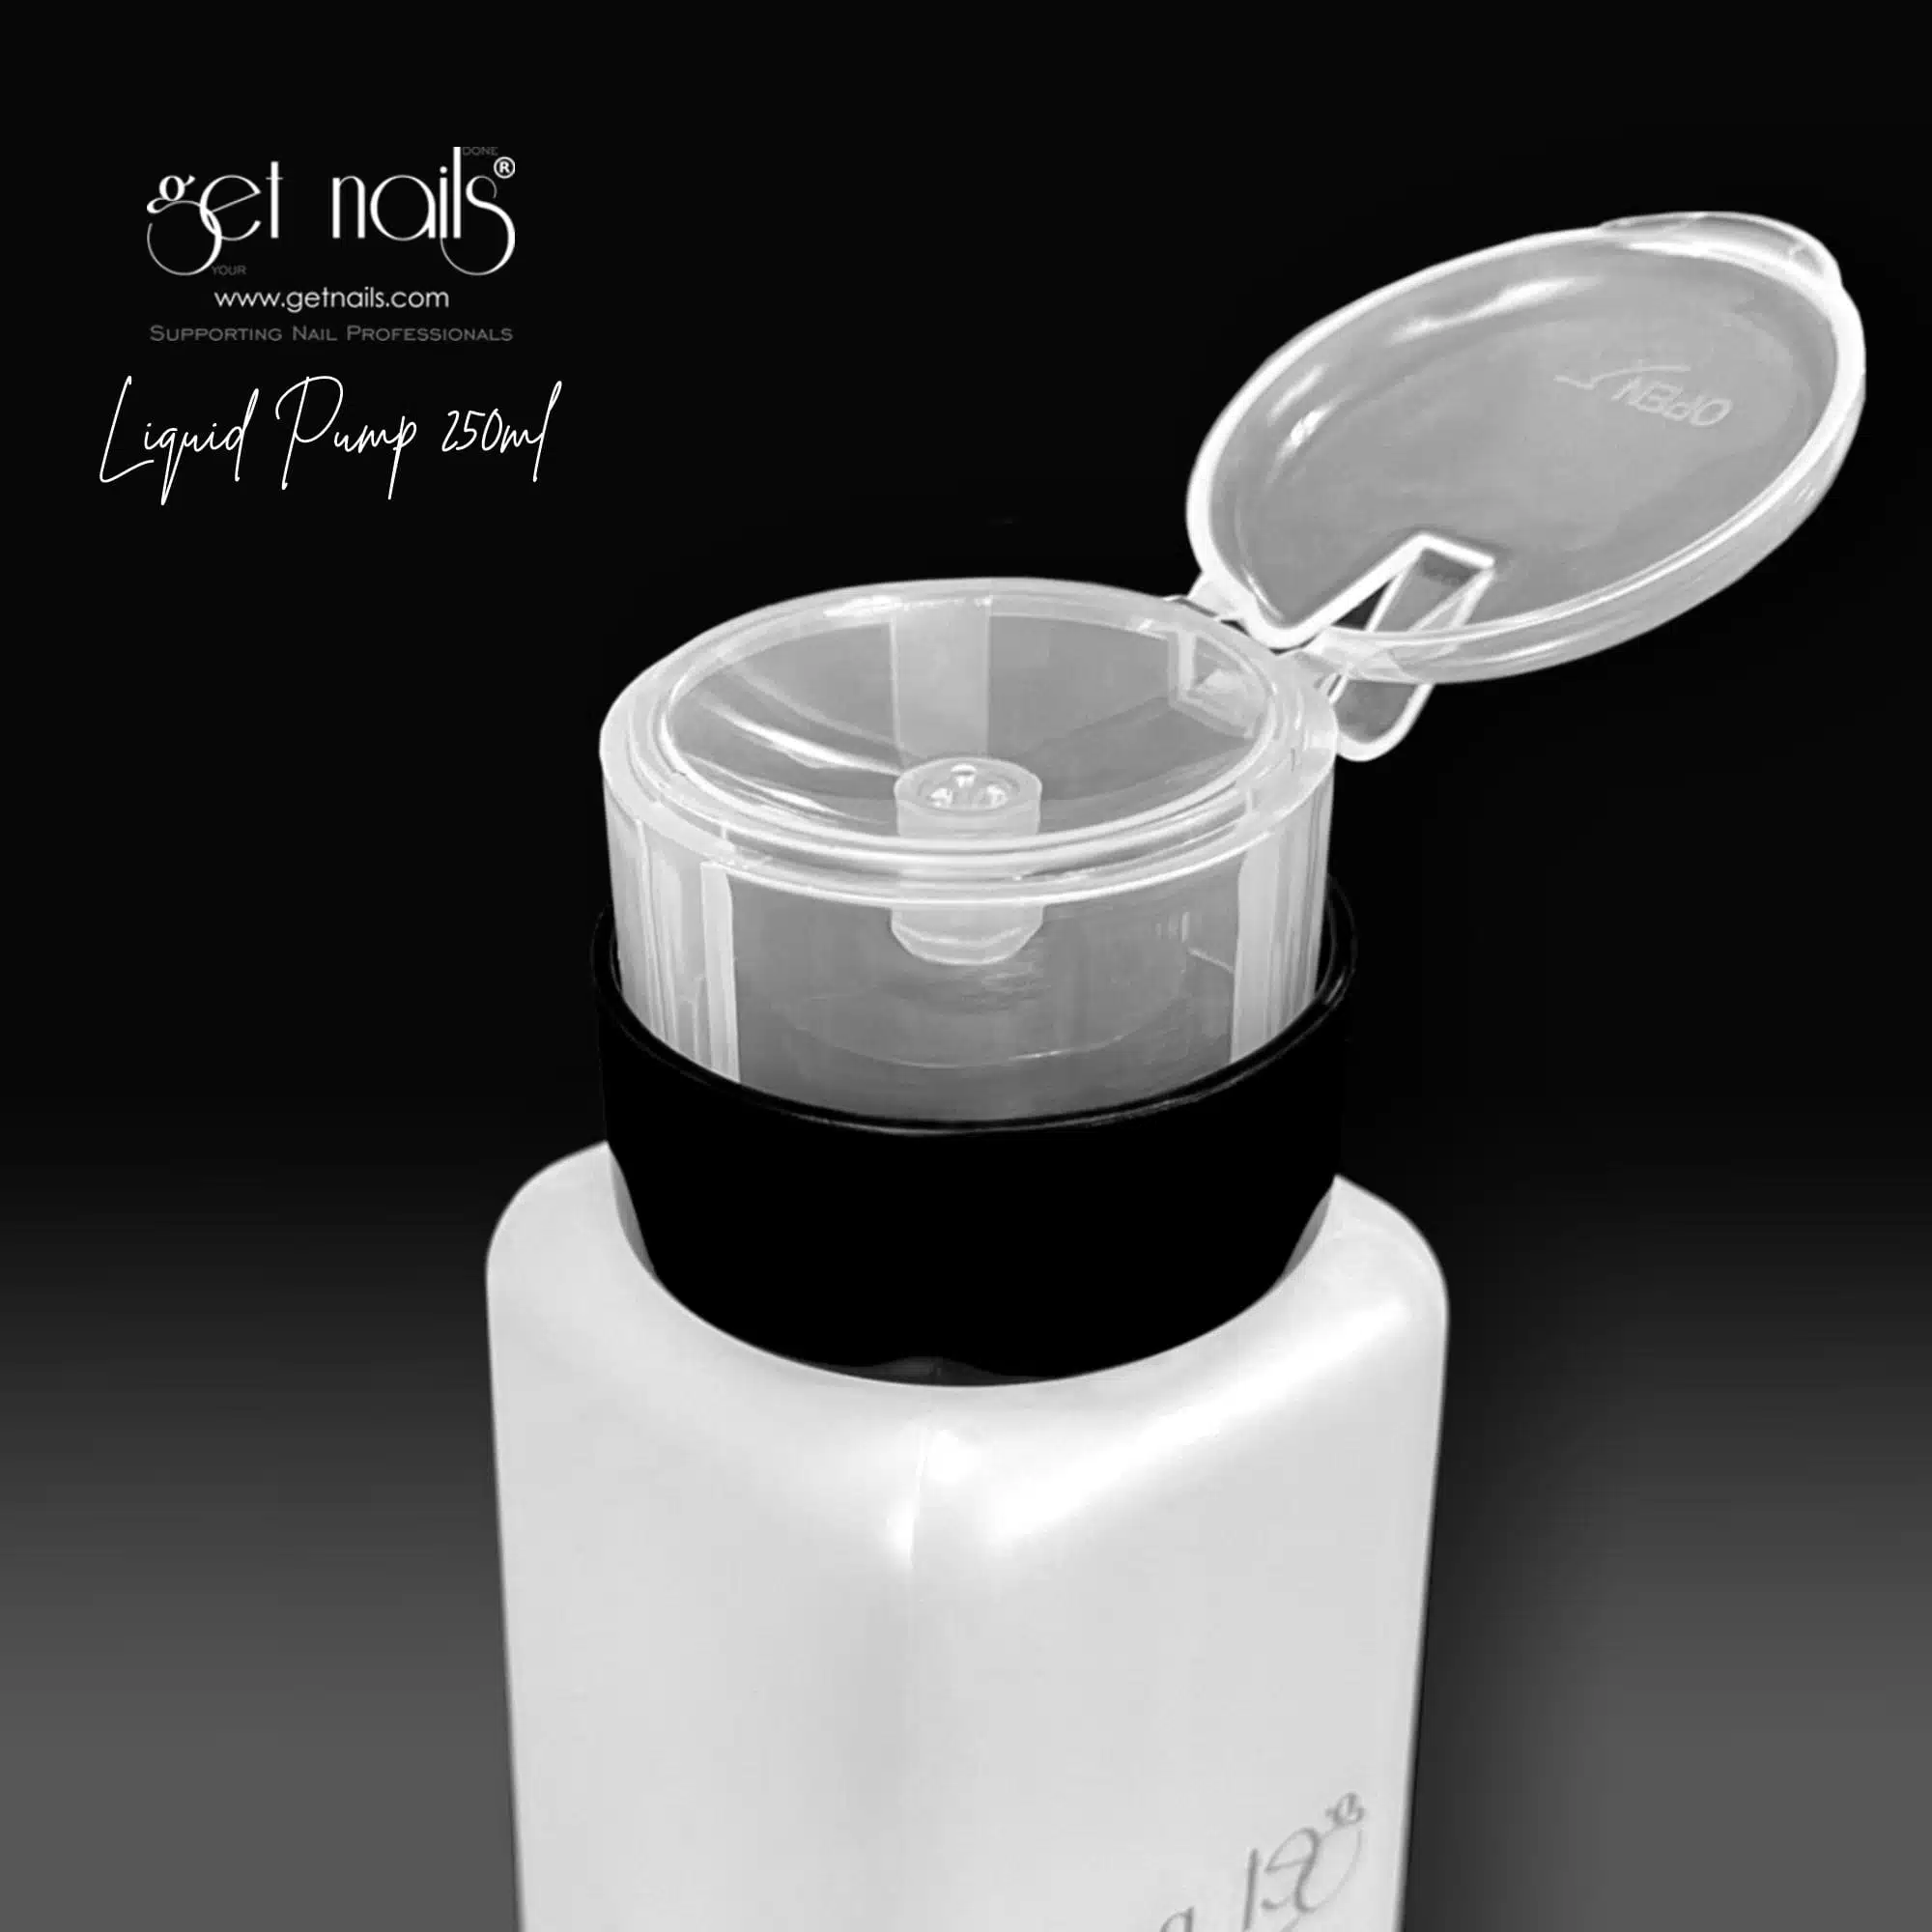 Get Nails Austria - Liquid Dispenser II - 250ml